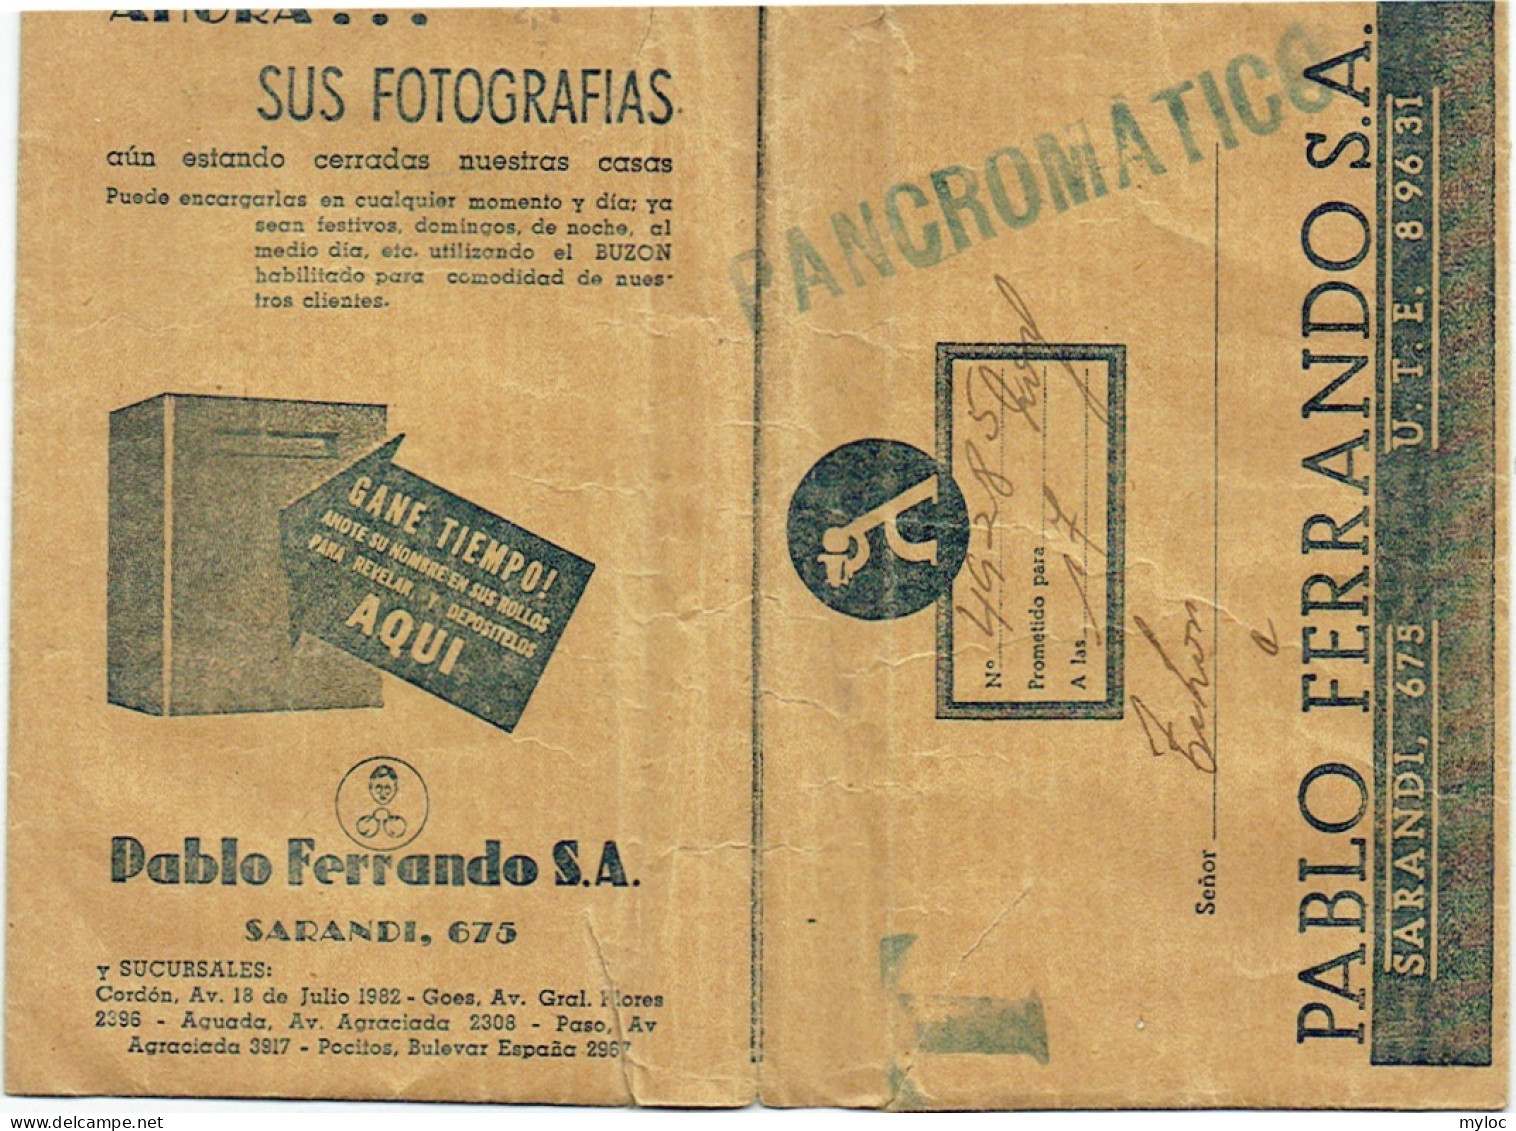 Foto/Photo. Pablo Ferrando, Sarandi, Uruguay. Ancienne Pochette Vide. - Supplies And Equipment